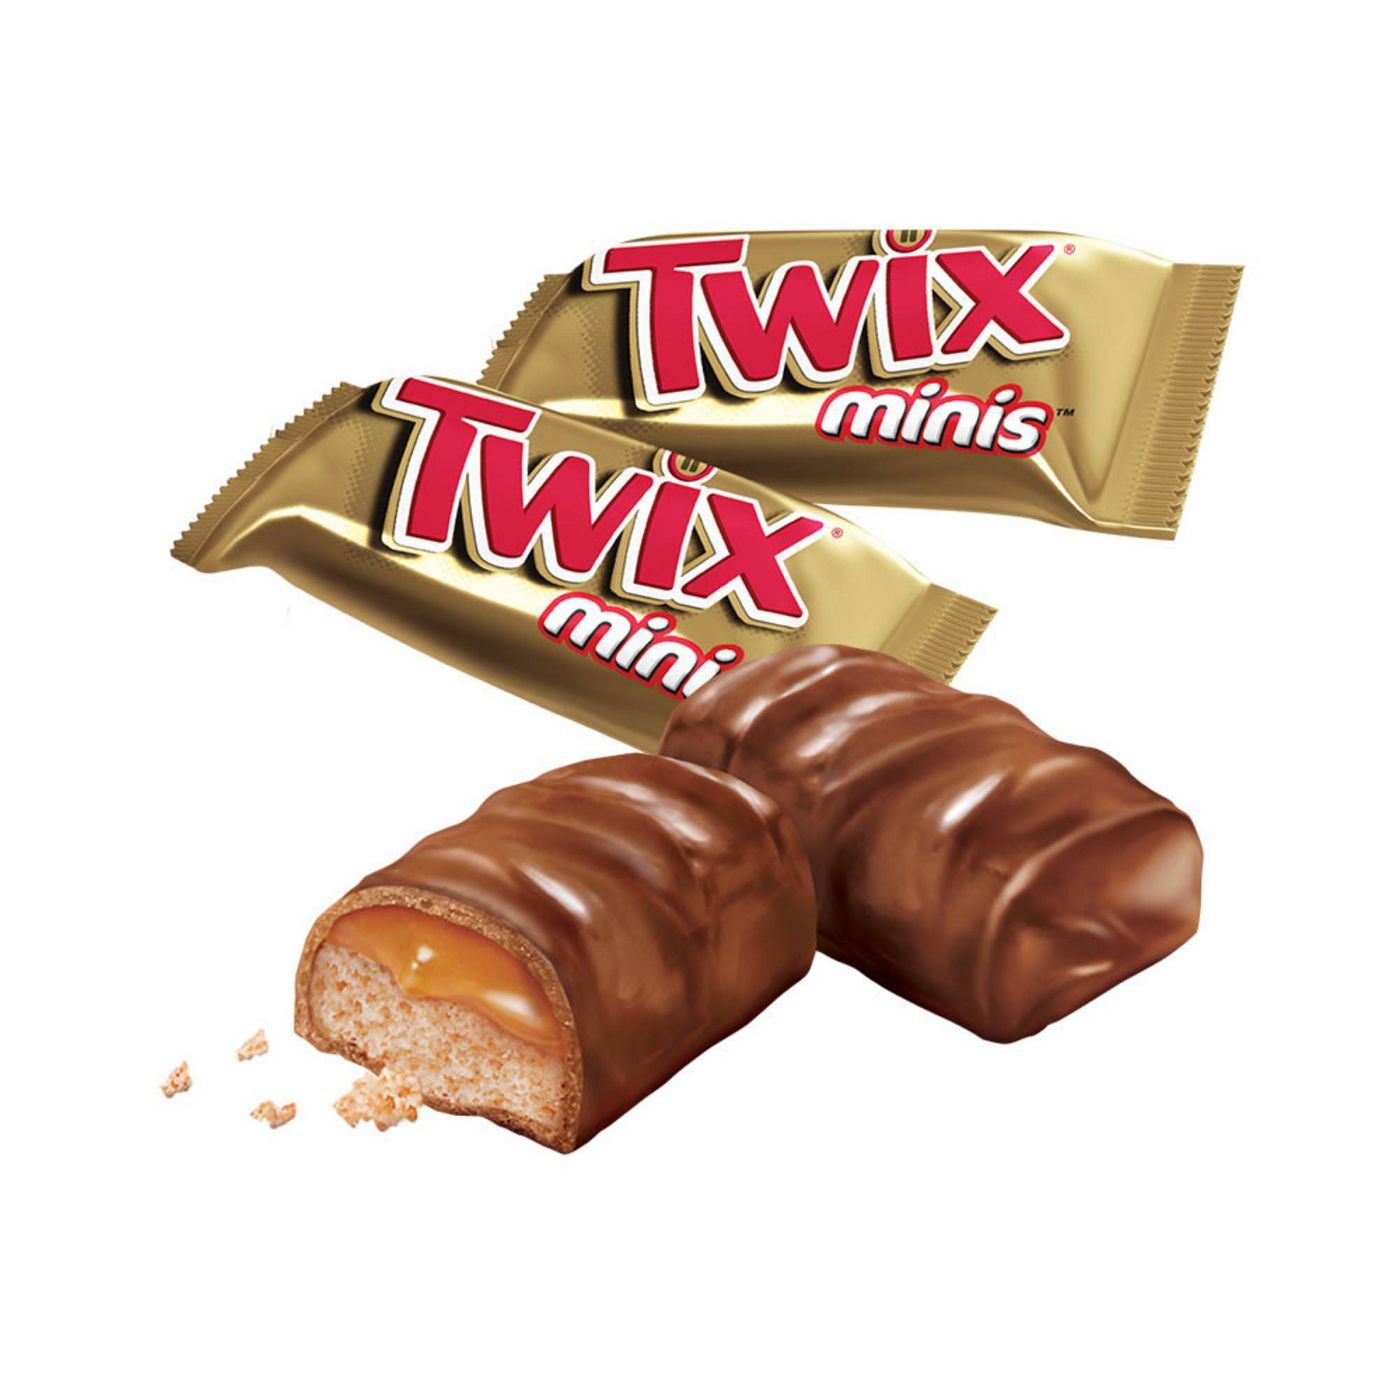 Twix Chocolate Candy Bars